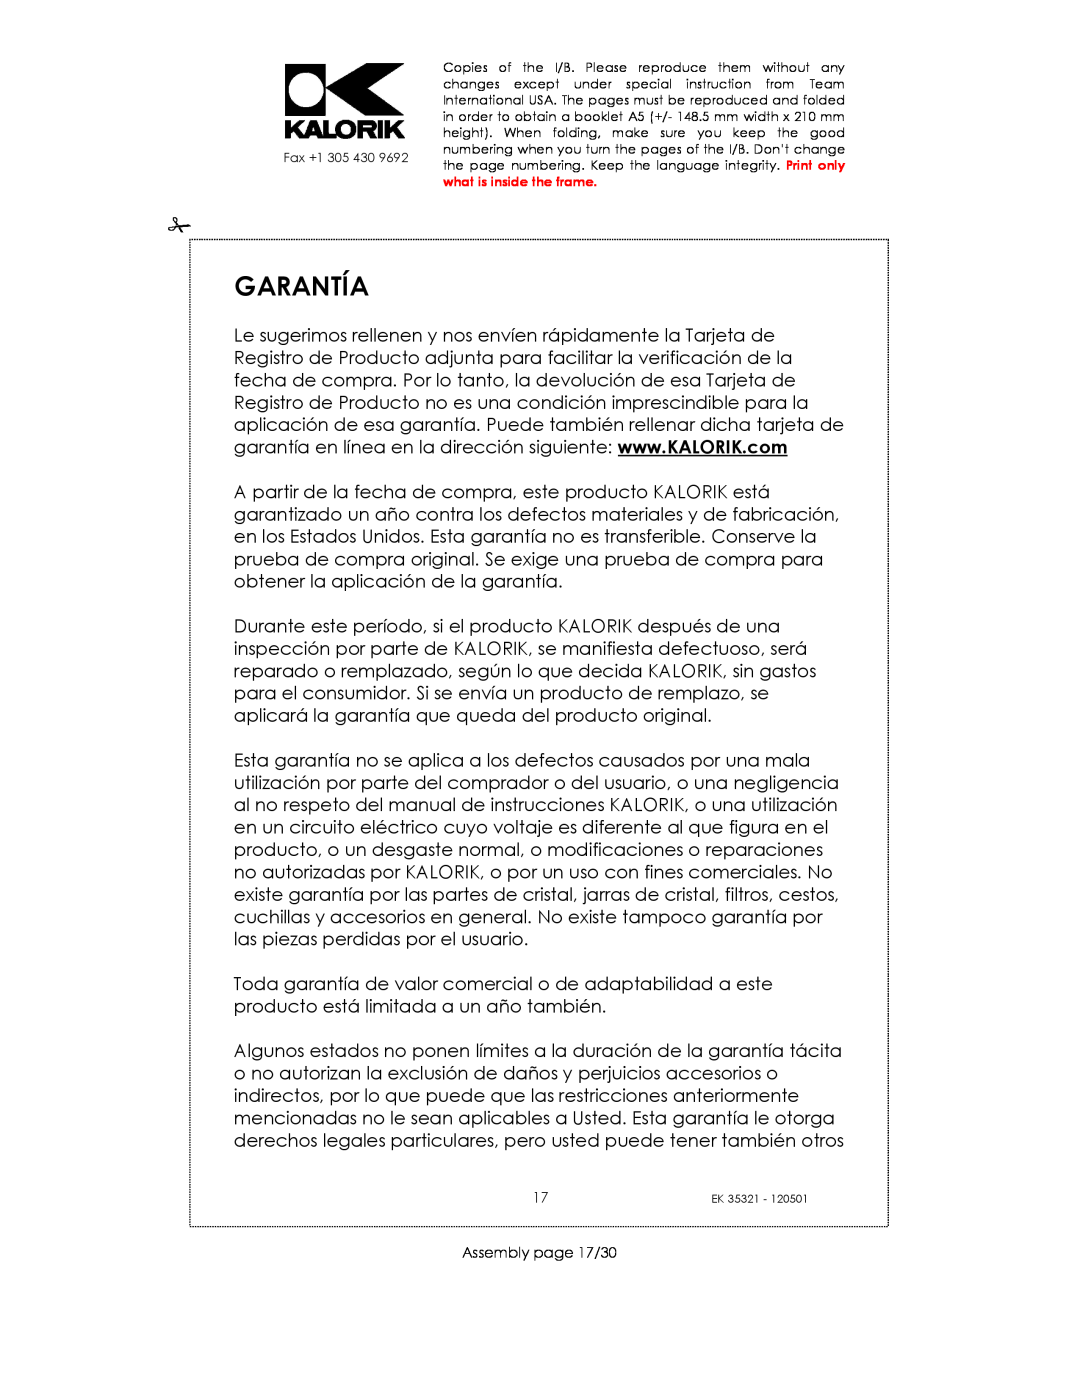 Kalorik EK35321 manual Garantía, Assembly page 17/30 